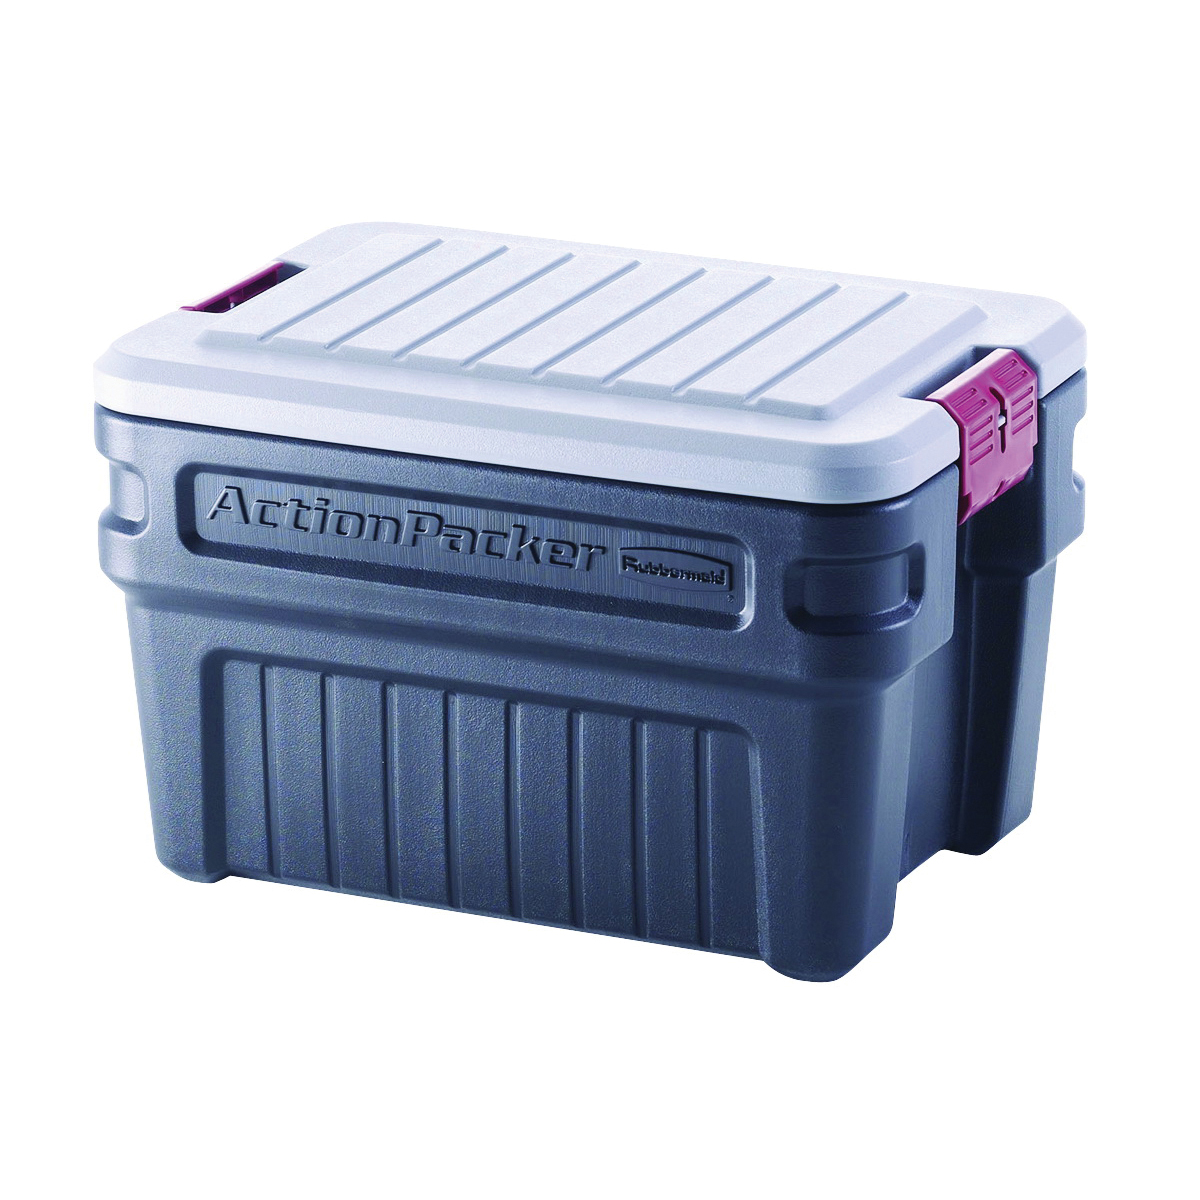 ActionPacker RMAP240000 Storage Box, Plastic, Black, 26-1/2 in L, 19.3 in W, 17.4 in H